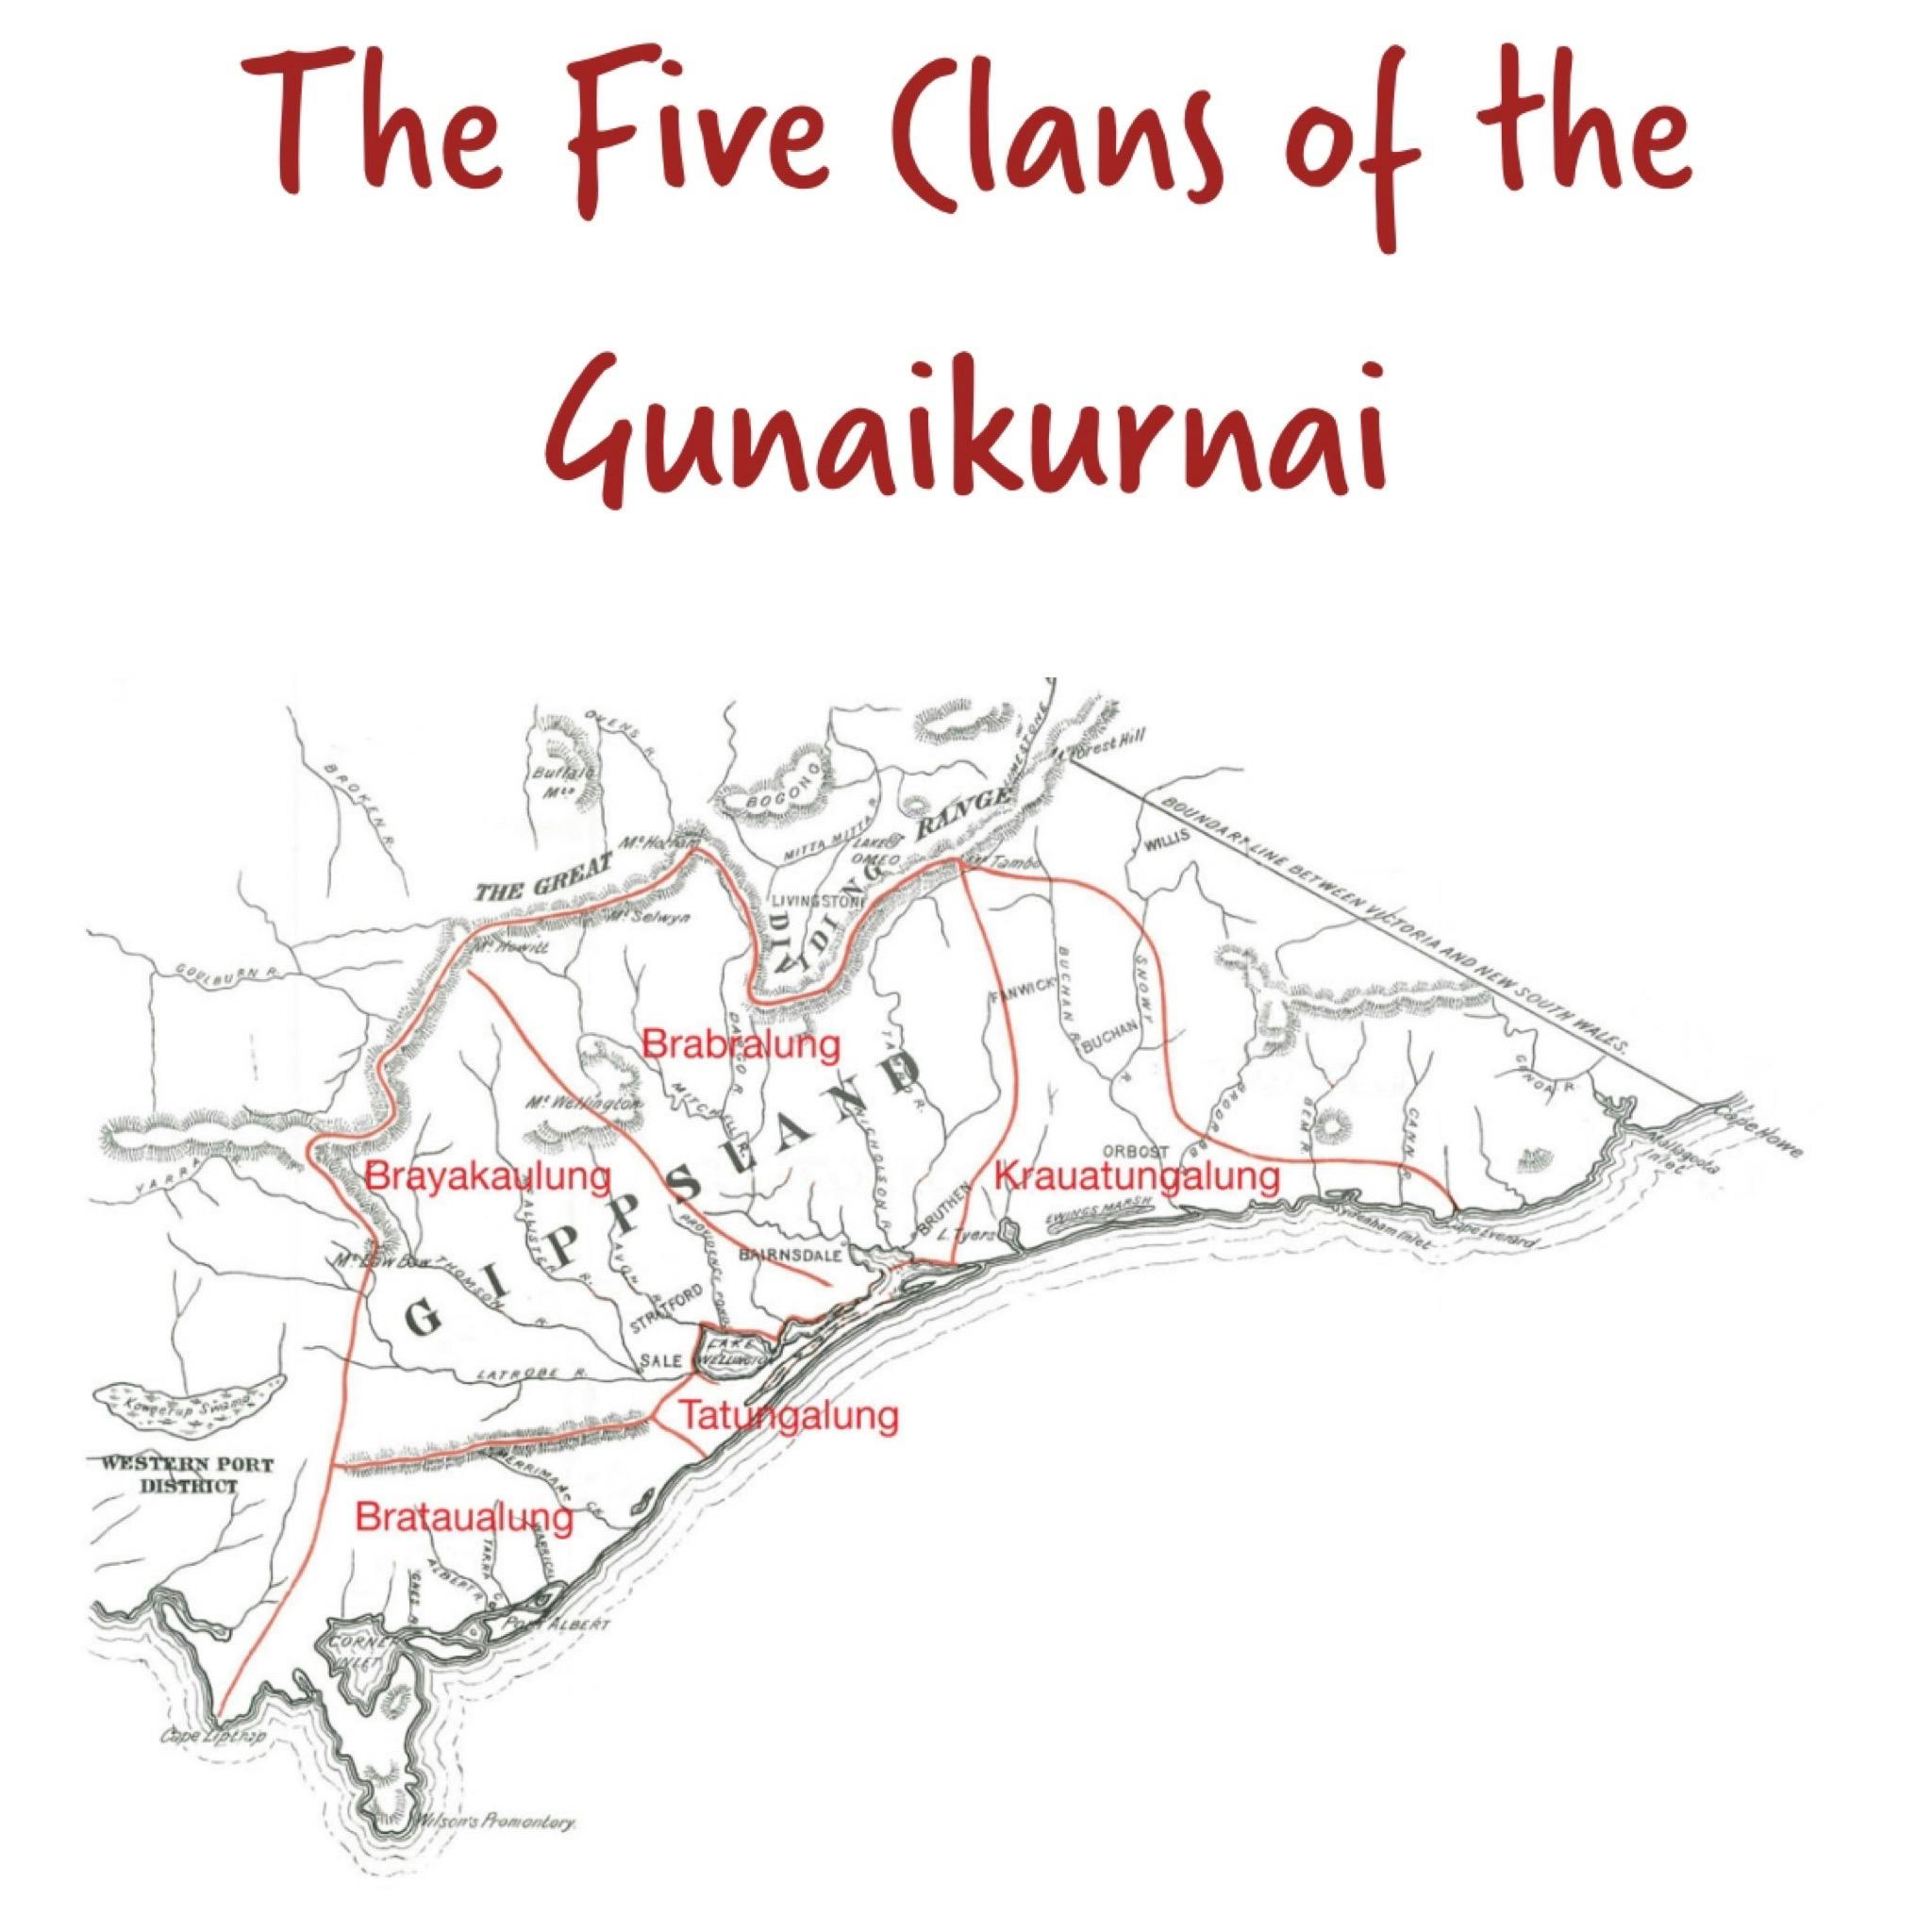 The Five Clans of the Gunaikurnai